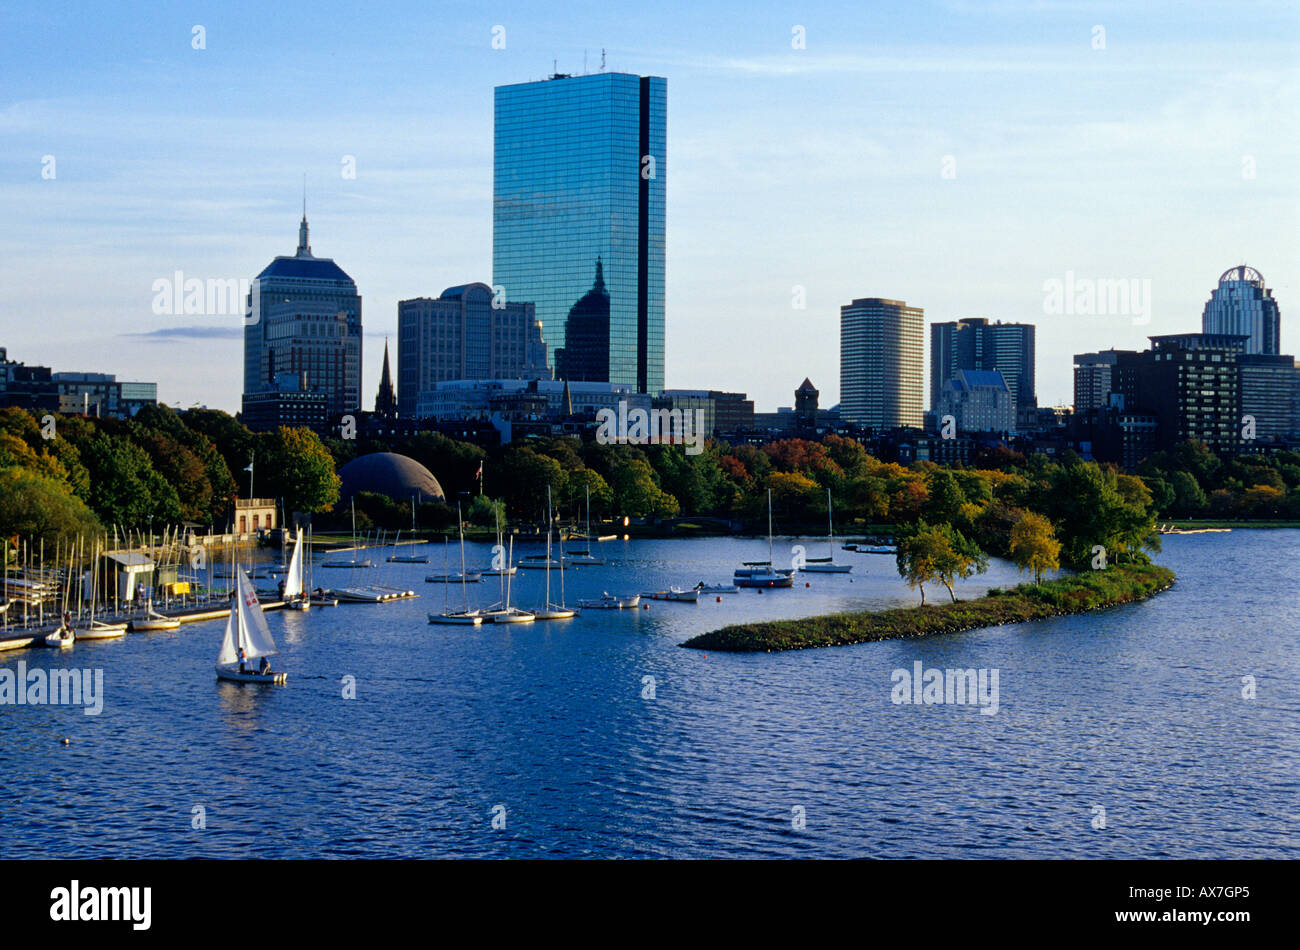 Marina am Charles River vor Hochhäusern, Boston, Massachussetts, USA, Amerika Stockfoto